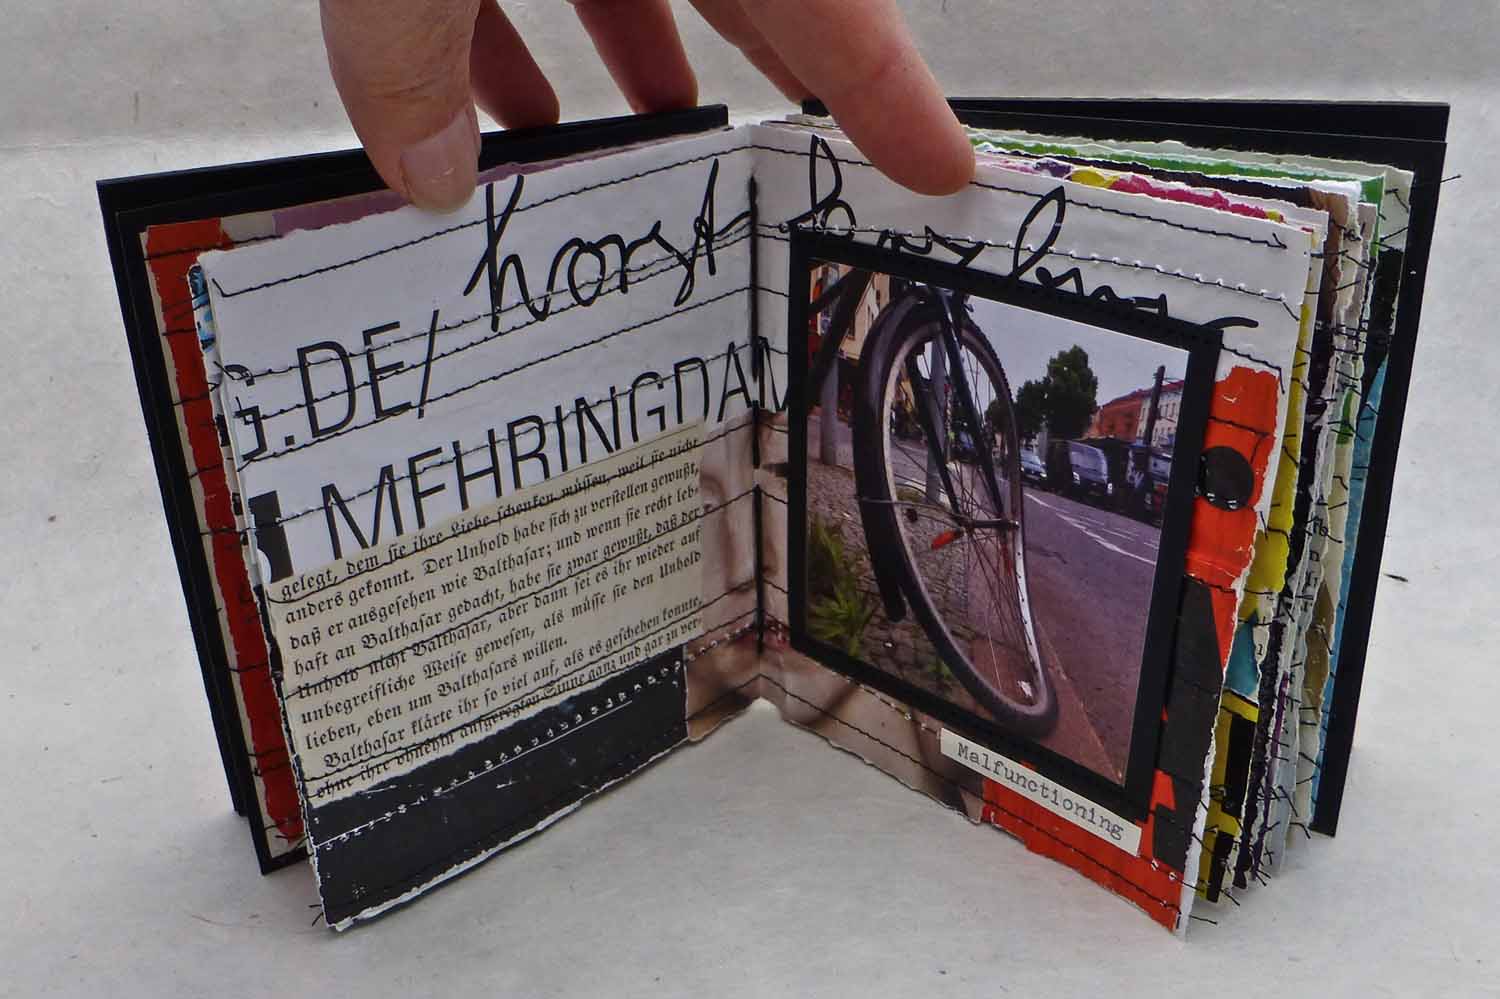 Berlin Bicycle